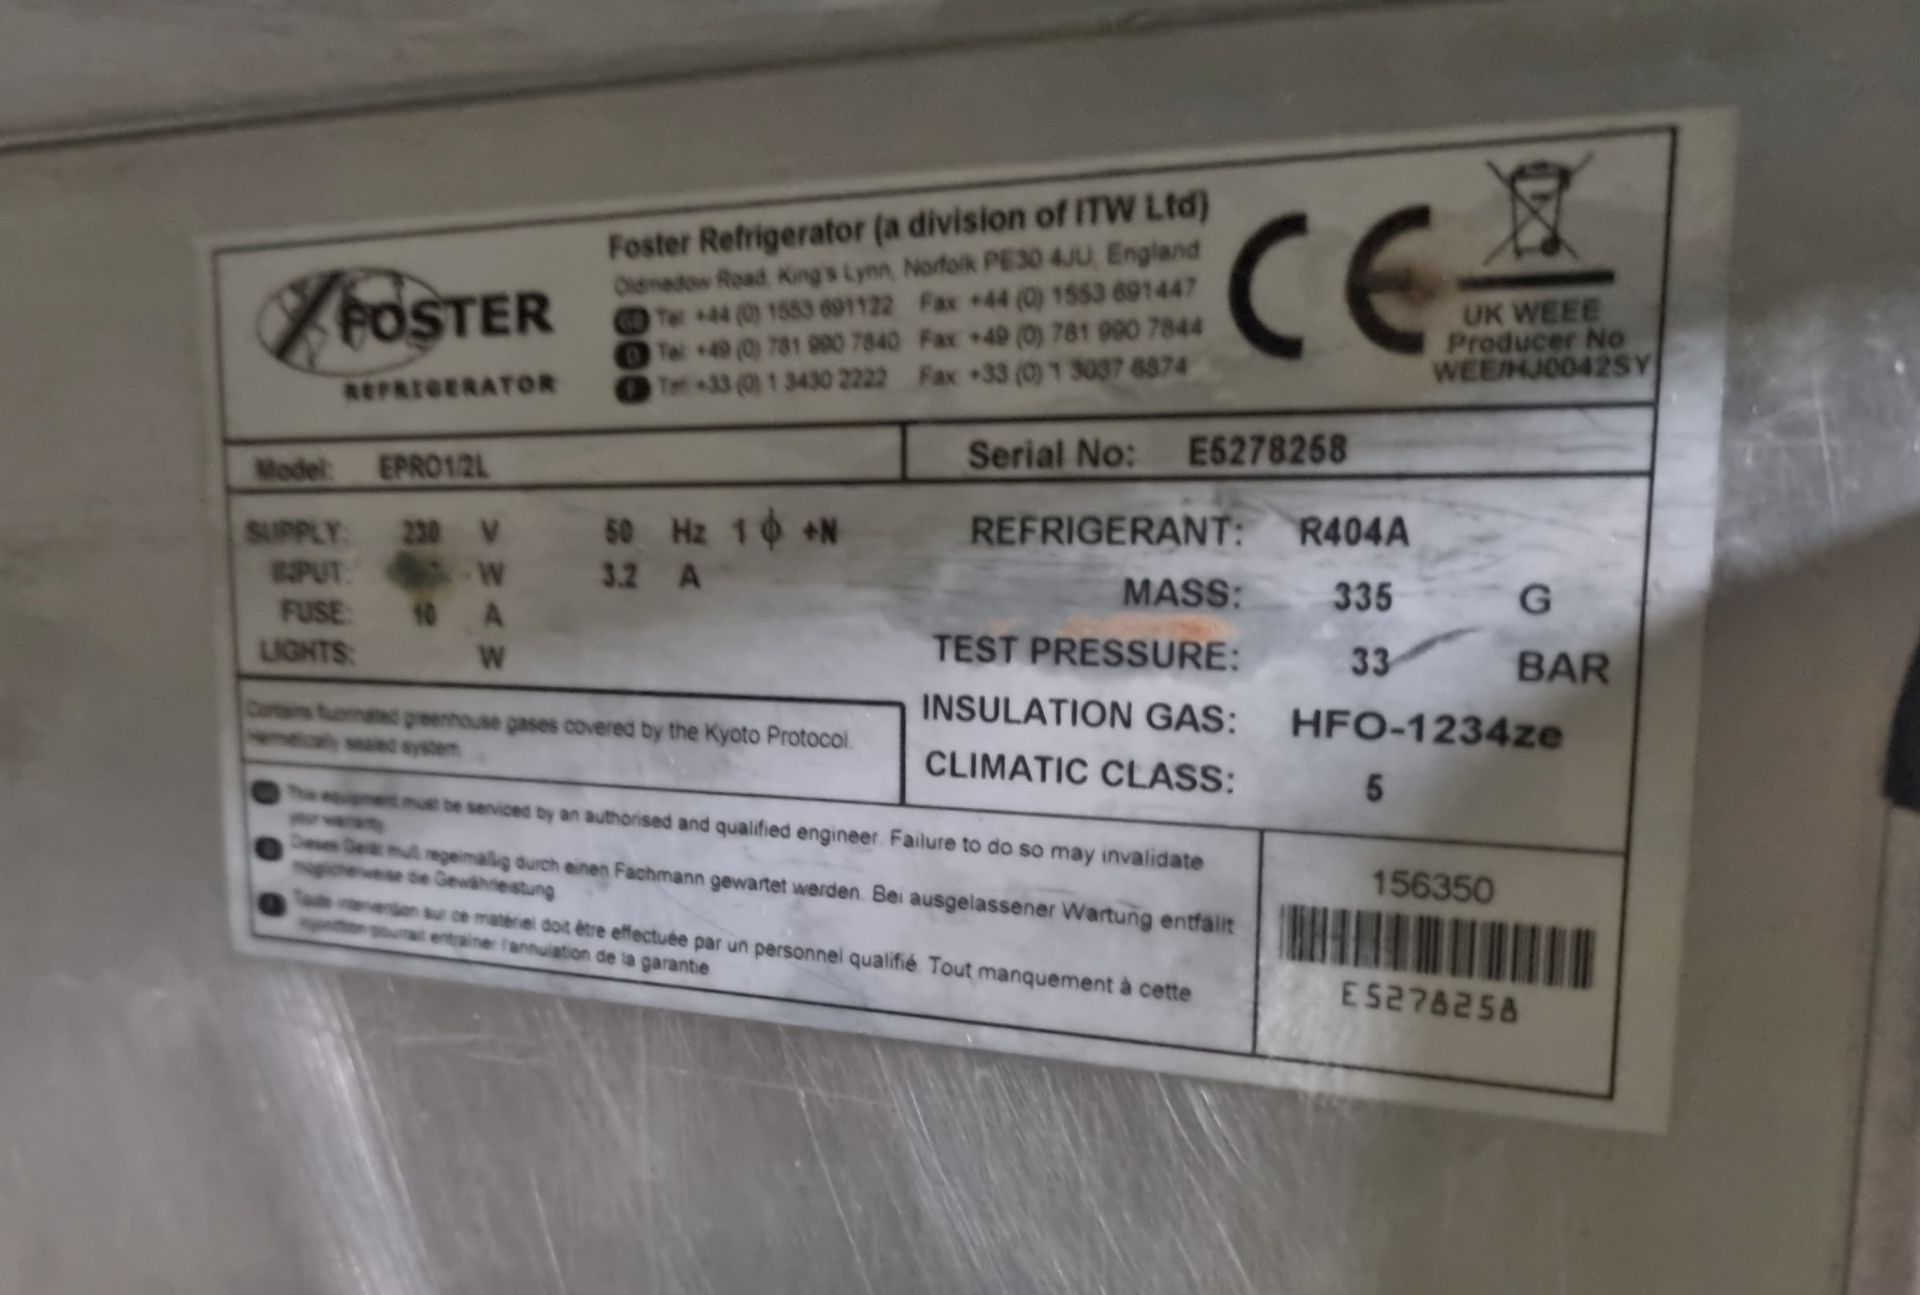 Foster EPRO1/2L stainless steel 2 door counter freezer - W 1420 x D 700 x H 990mm - Image 6 of 7